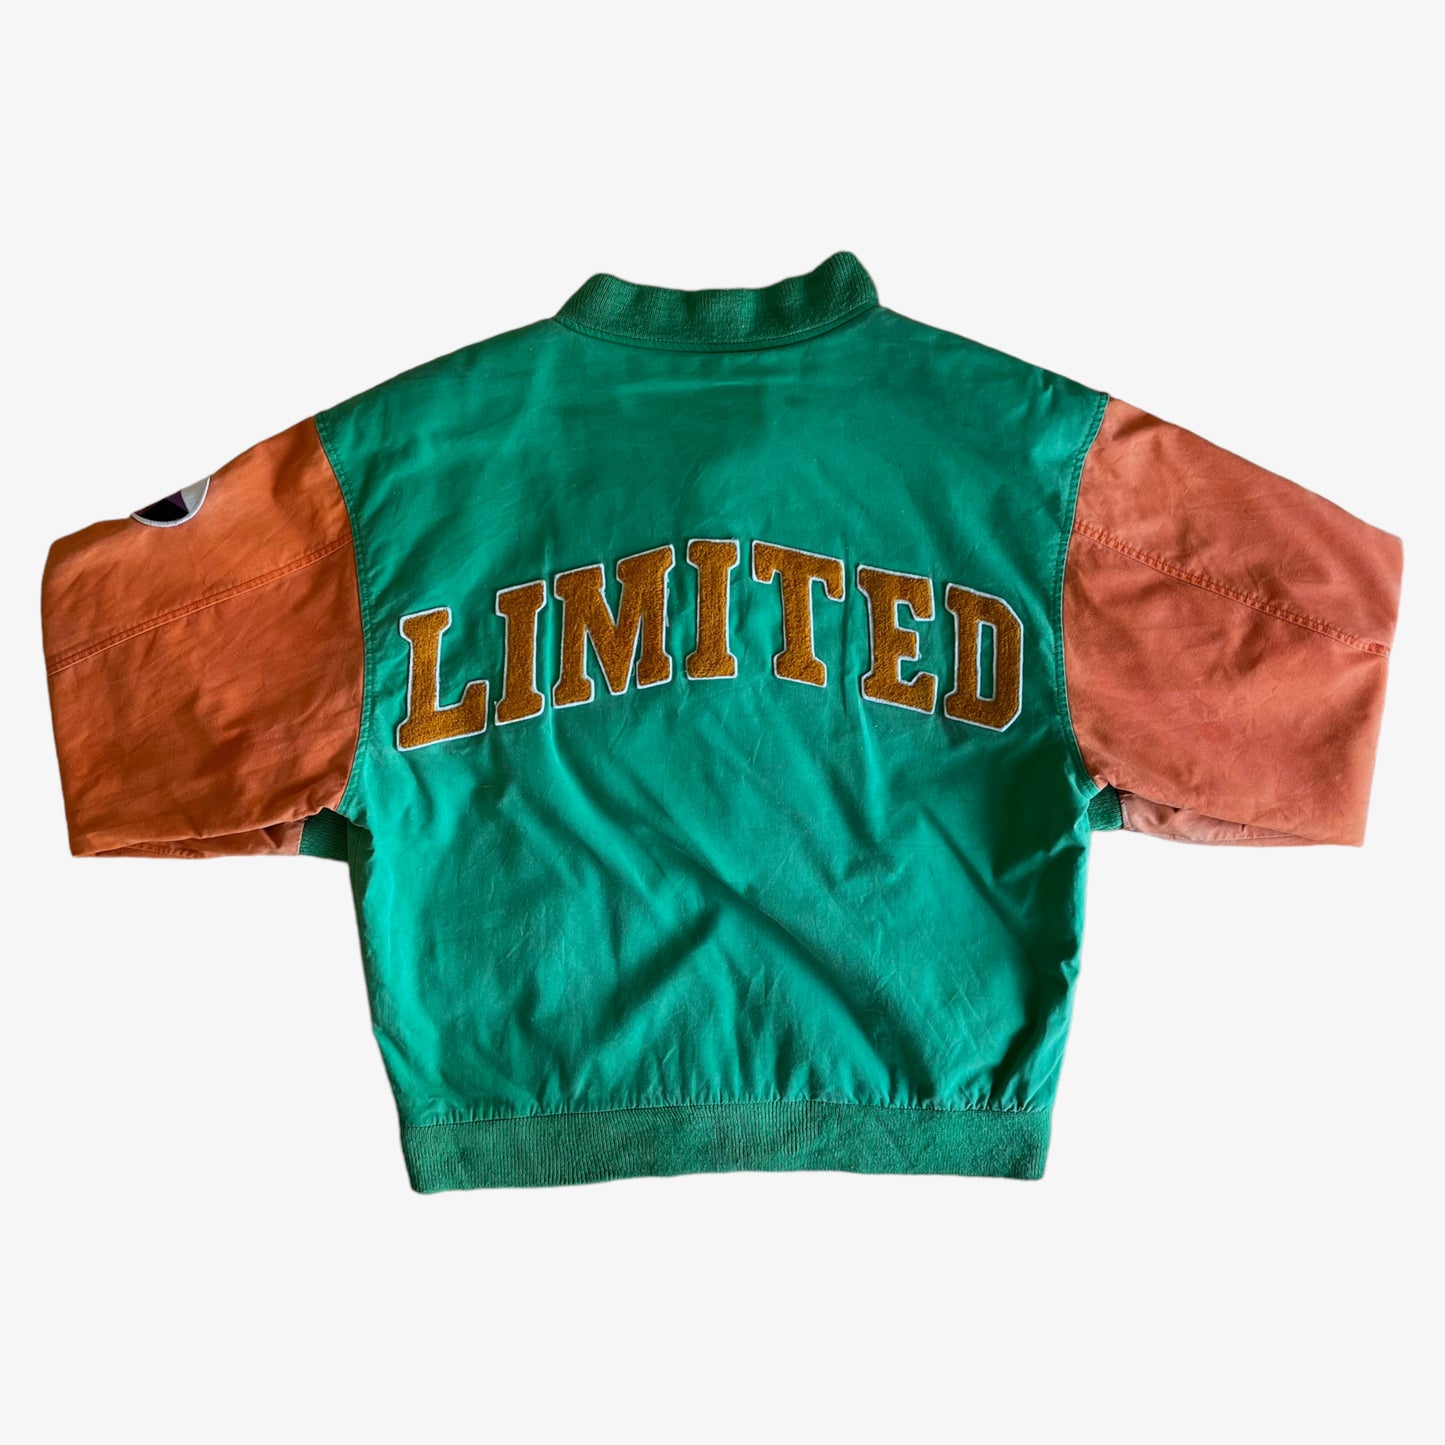 Vintage 90s The Limited Green And Orange Varsity Jacket Back - Casspios Dream